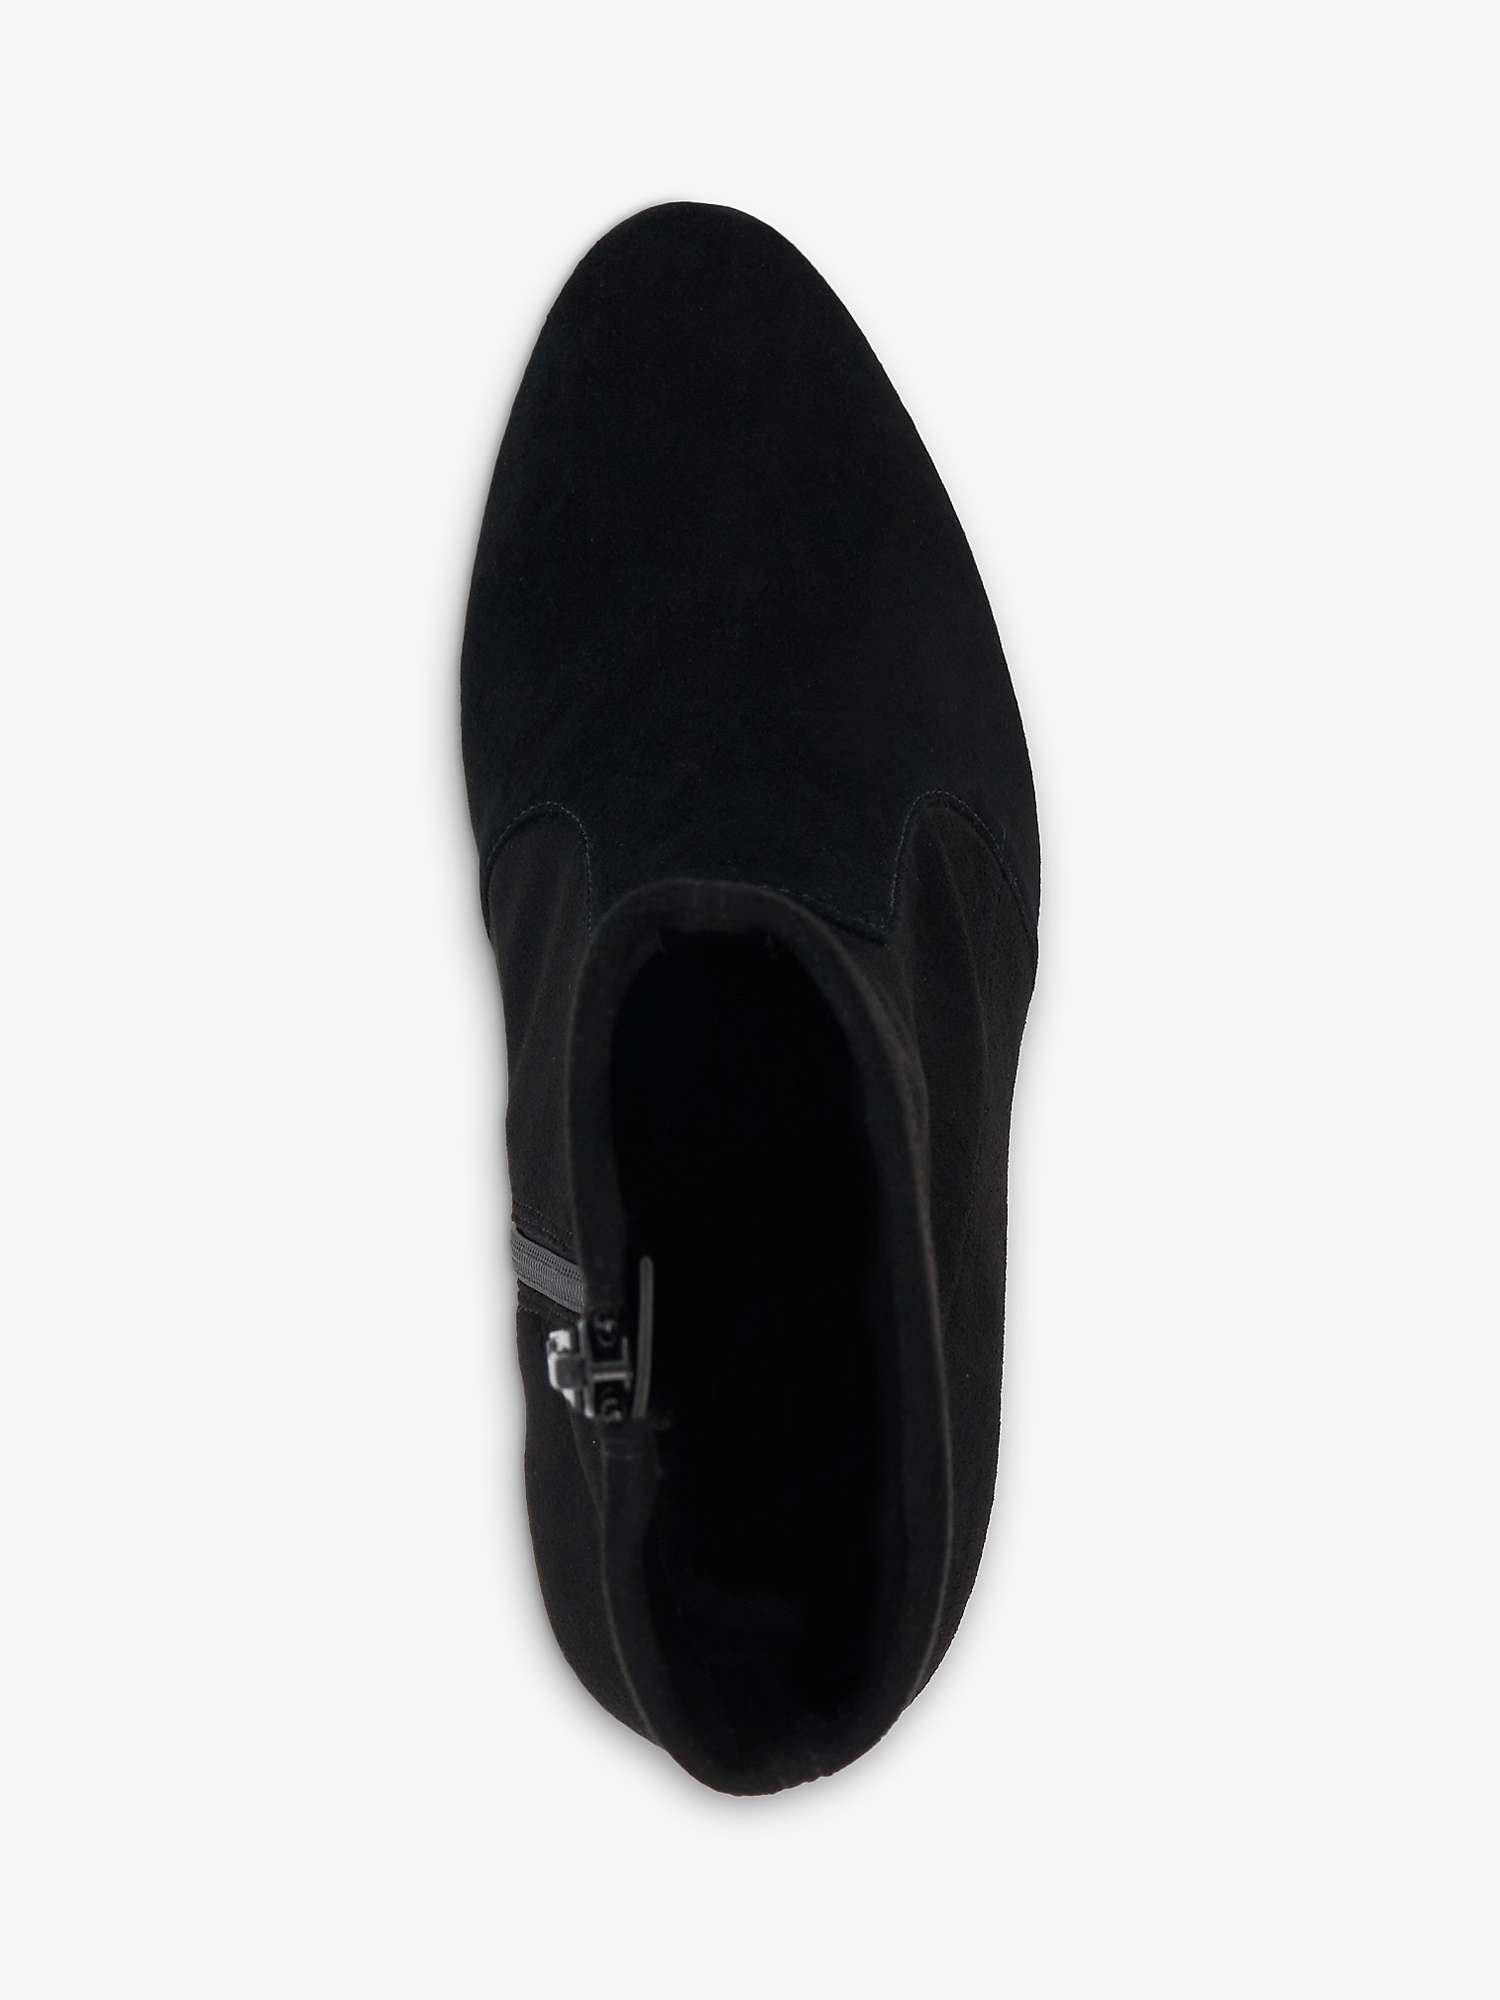 Buy Dune Wide Fit Optical Suede Stretch Sock Block Heel Boots, Black Online at johnlewis.com